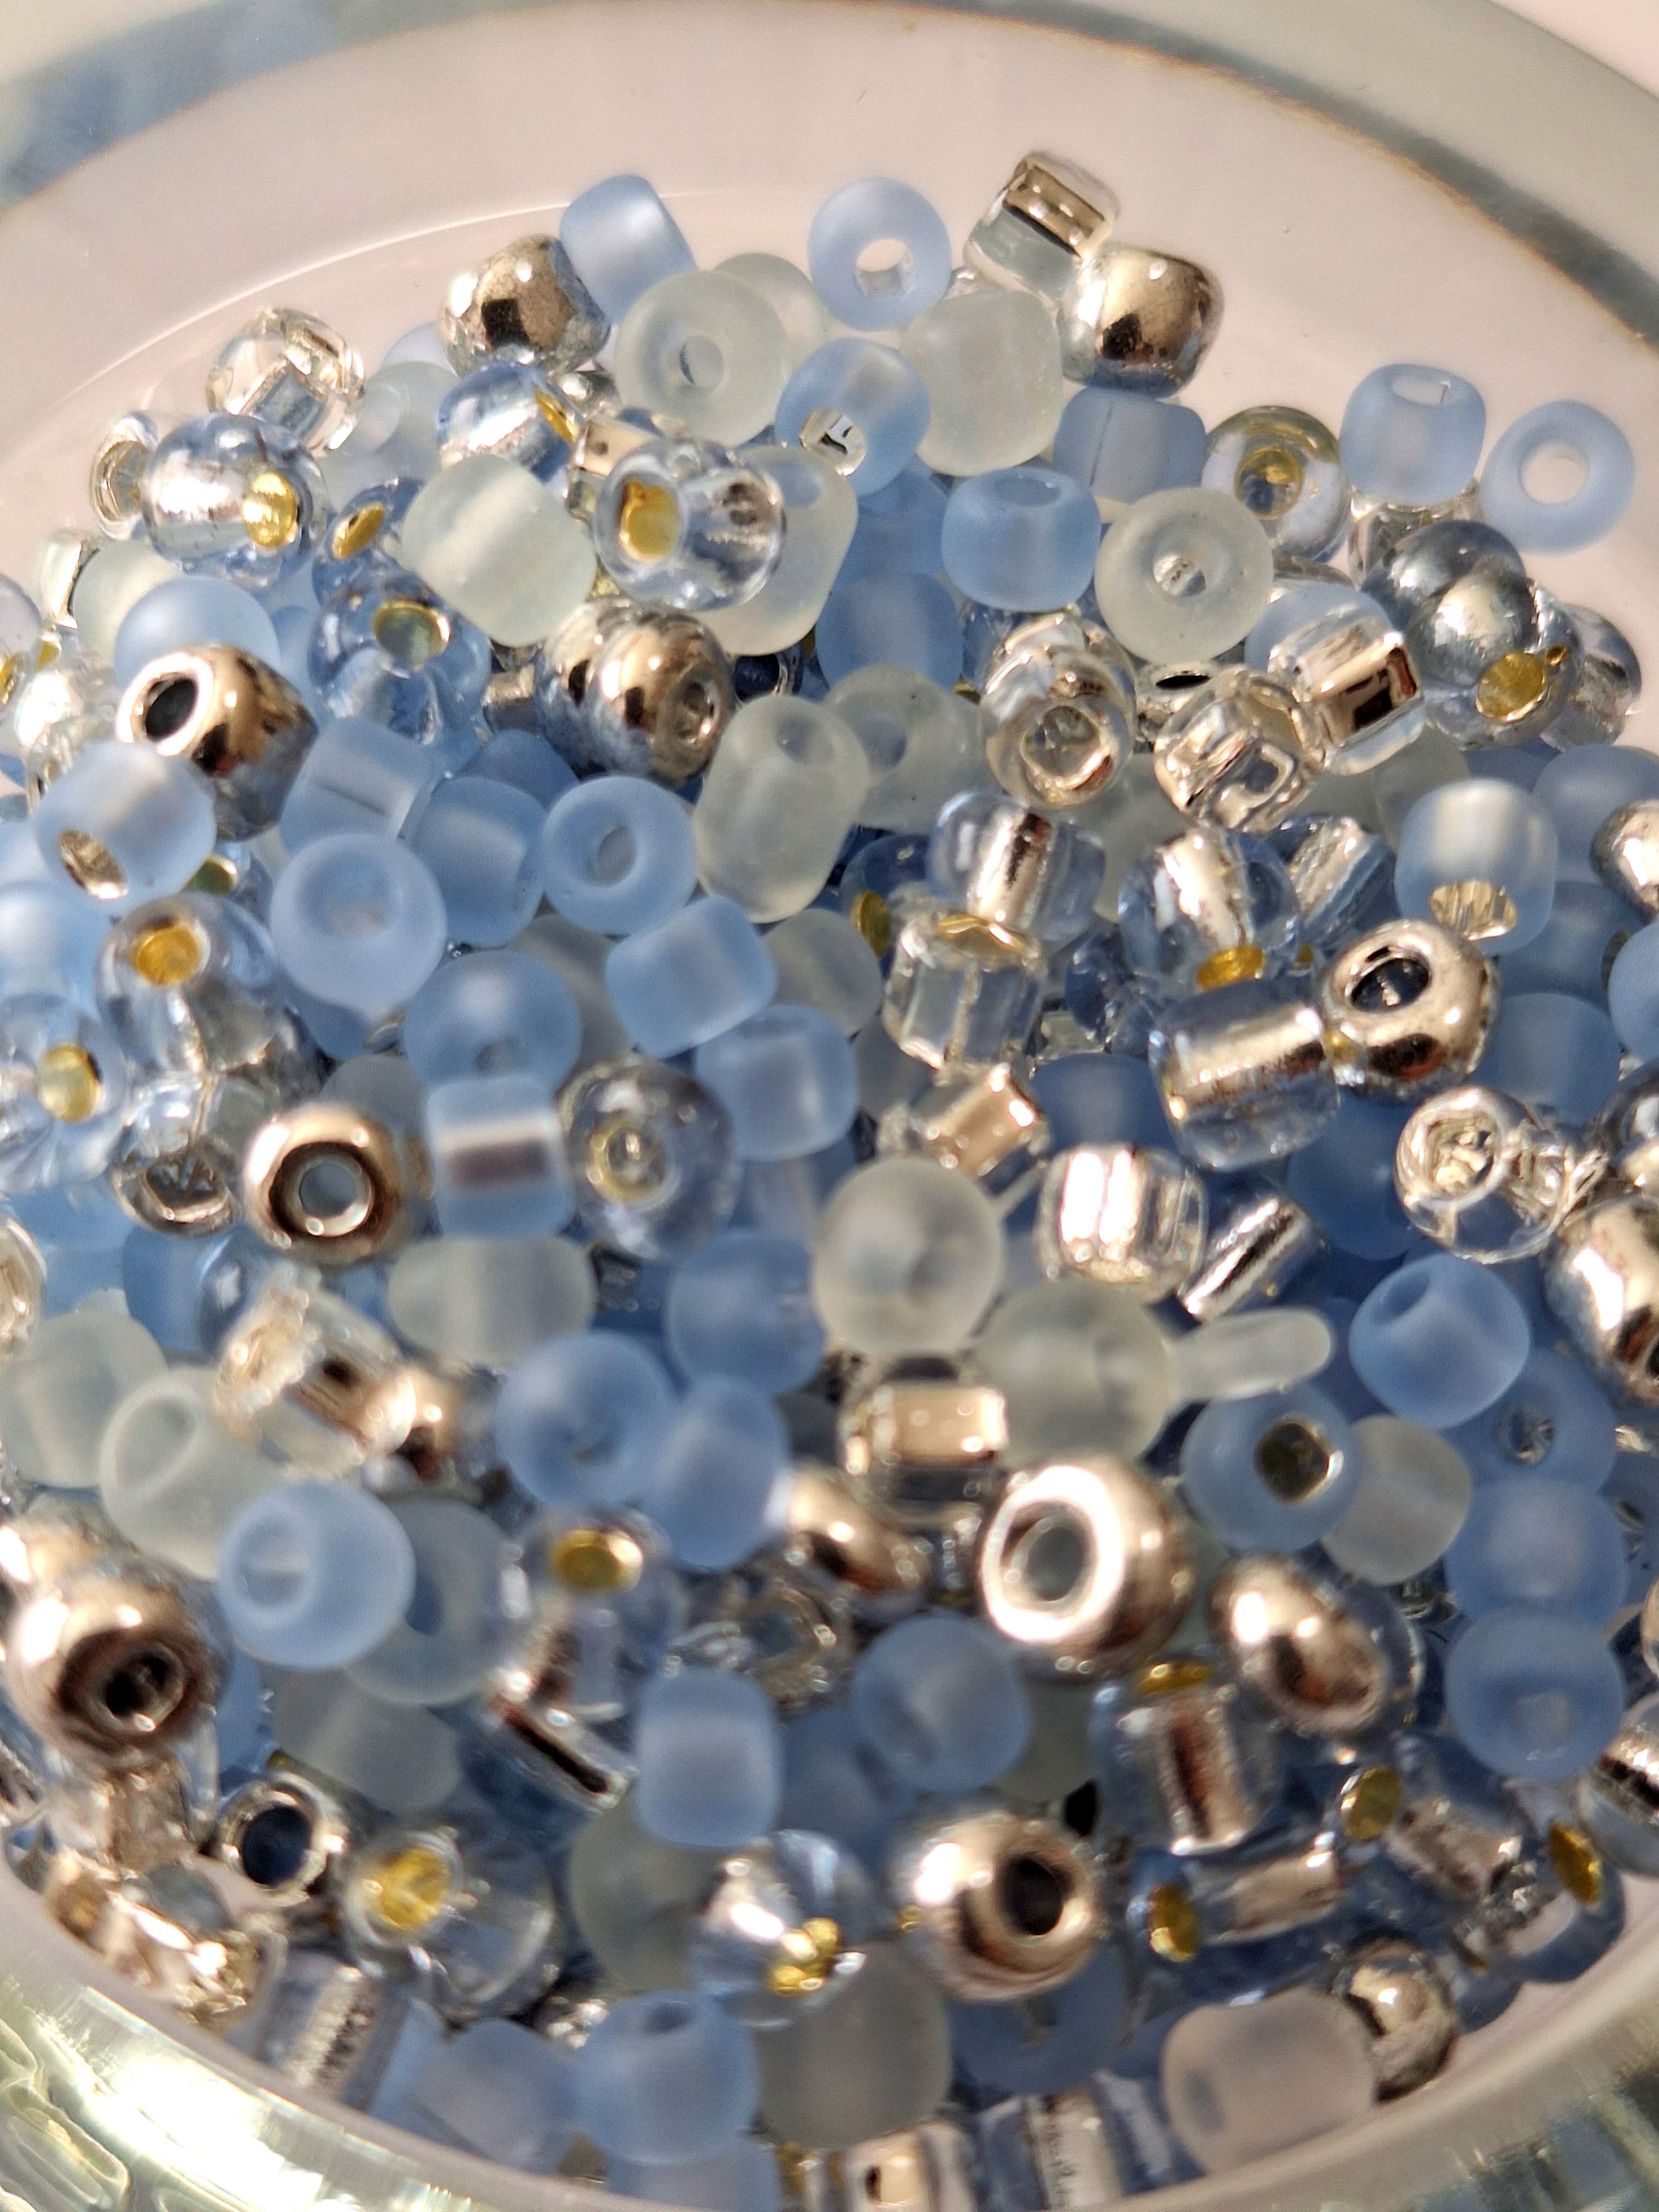 Locsanity Loc Sprinkles Complete Installation Kit Glass Beads - Locs